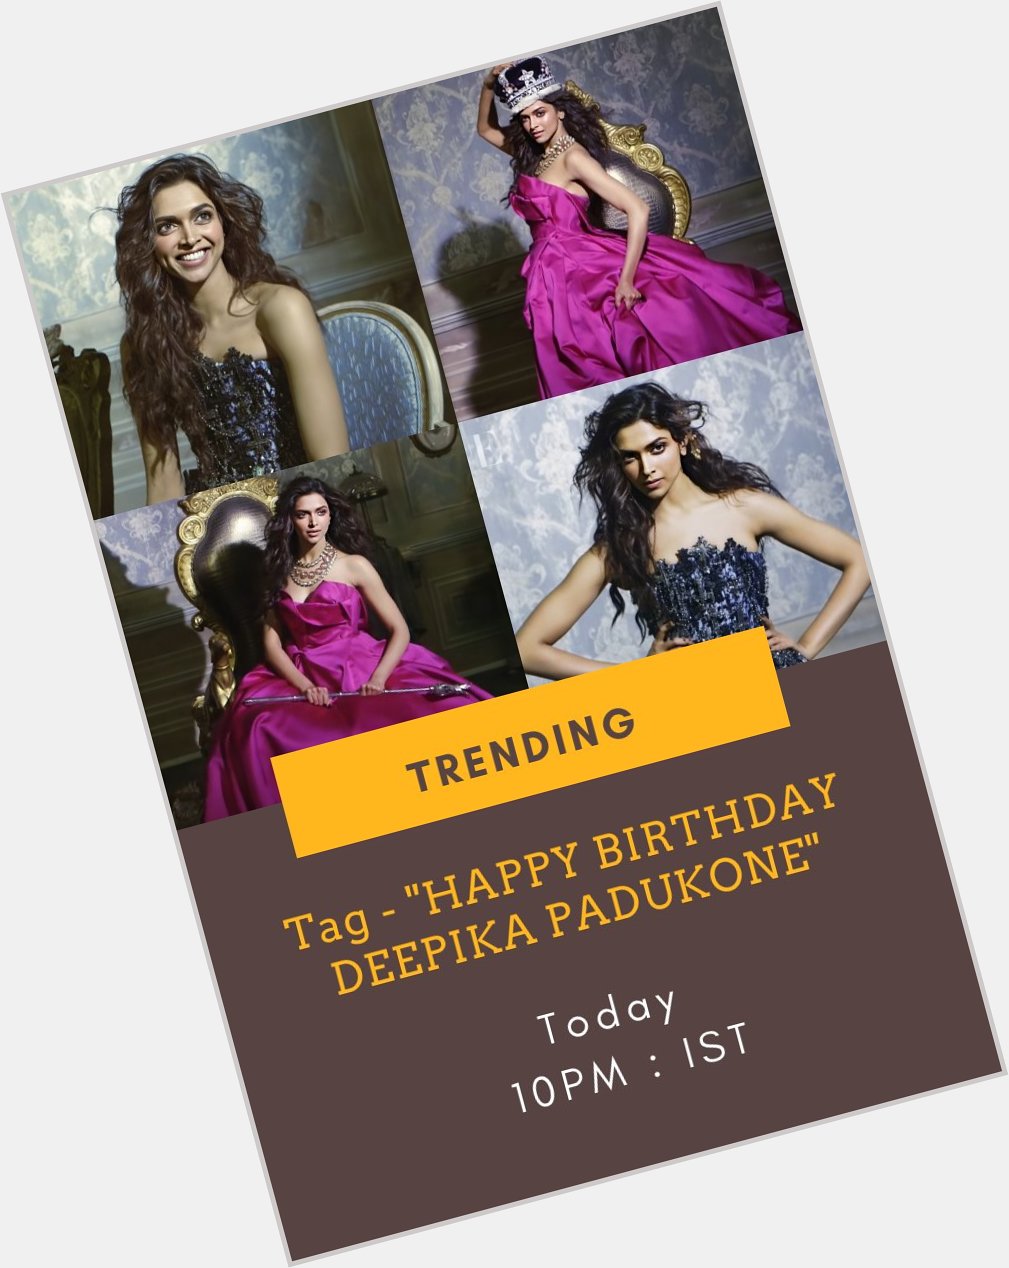 Reminder: We are trending Happy Birthday Deepika Padukone at 10pm IST today!   